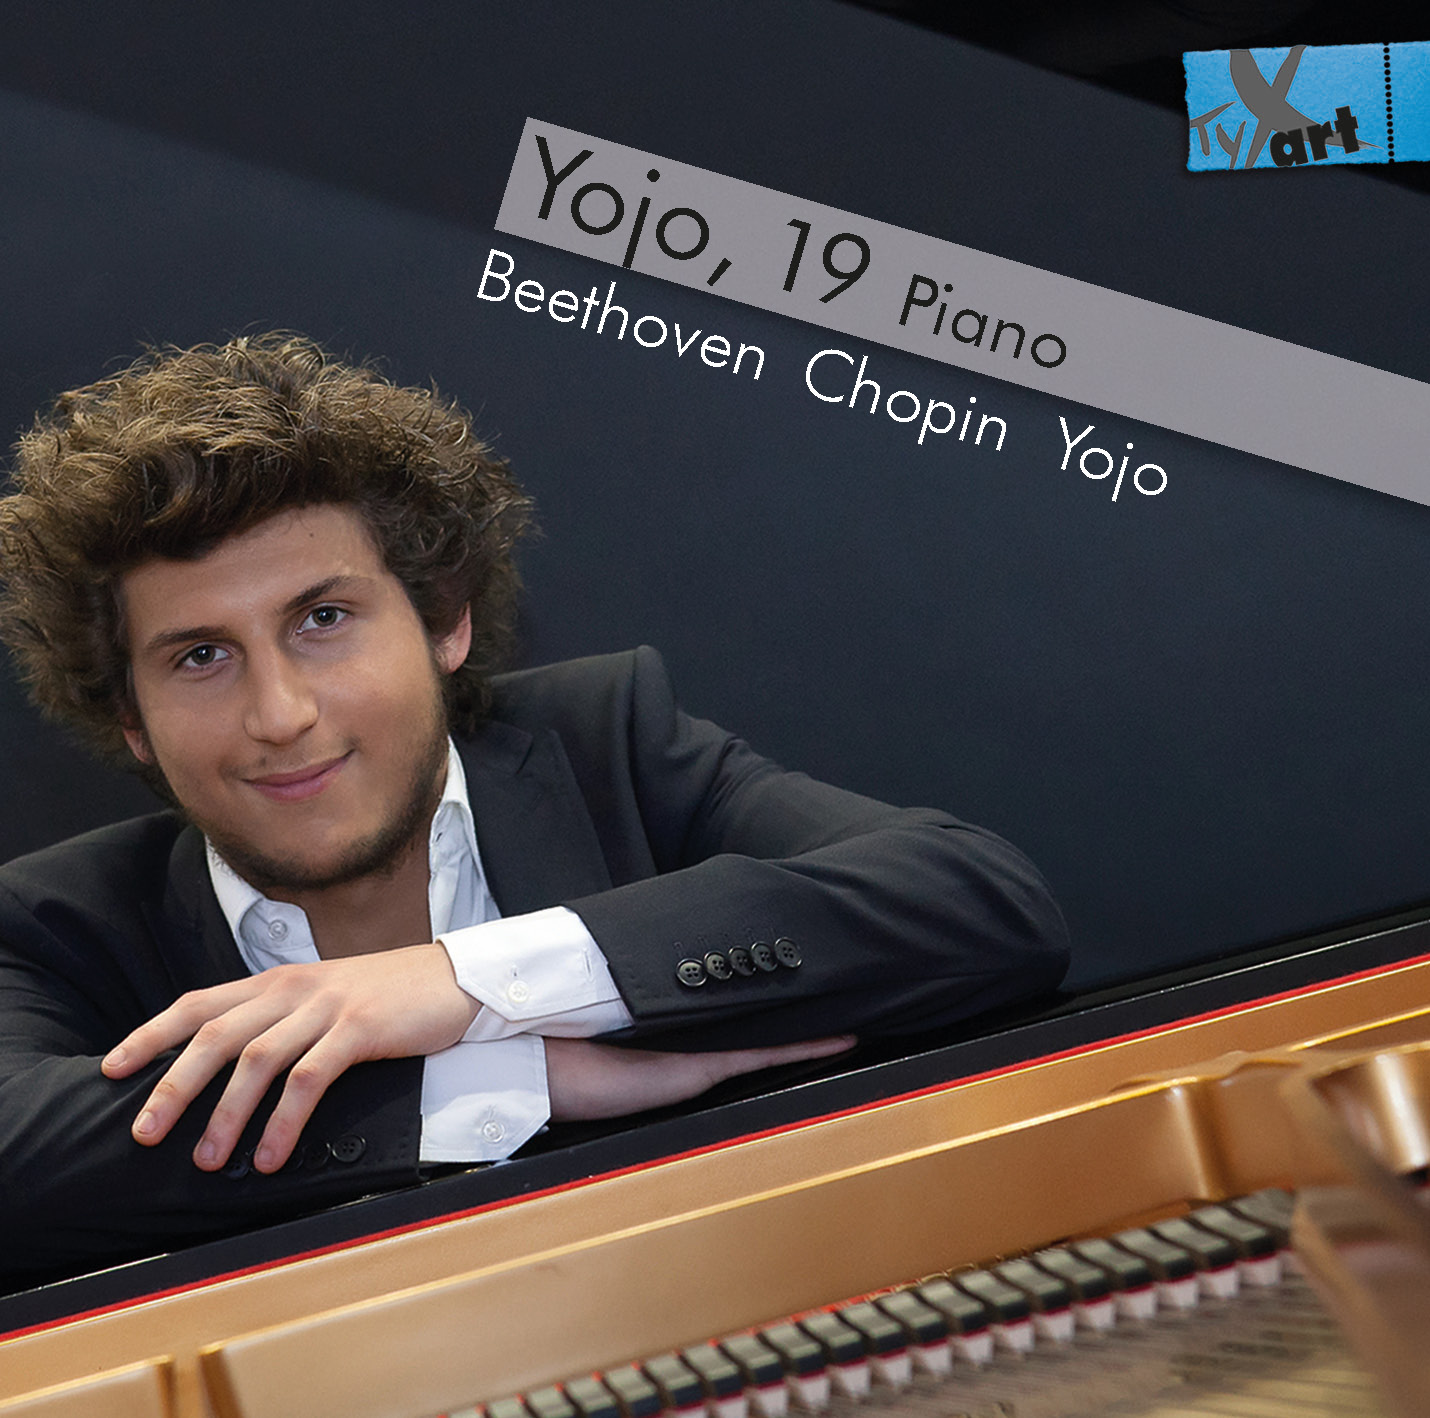 Yojo, 19, Piano: Beethoven, Chopin, Yojo